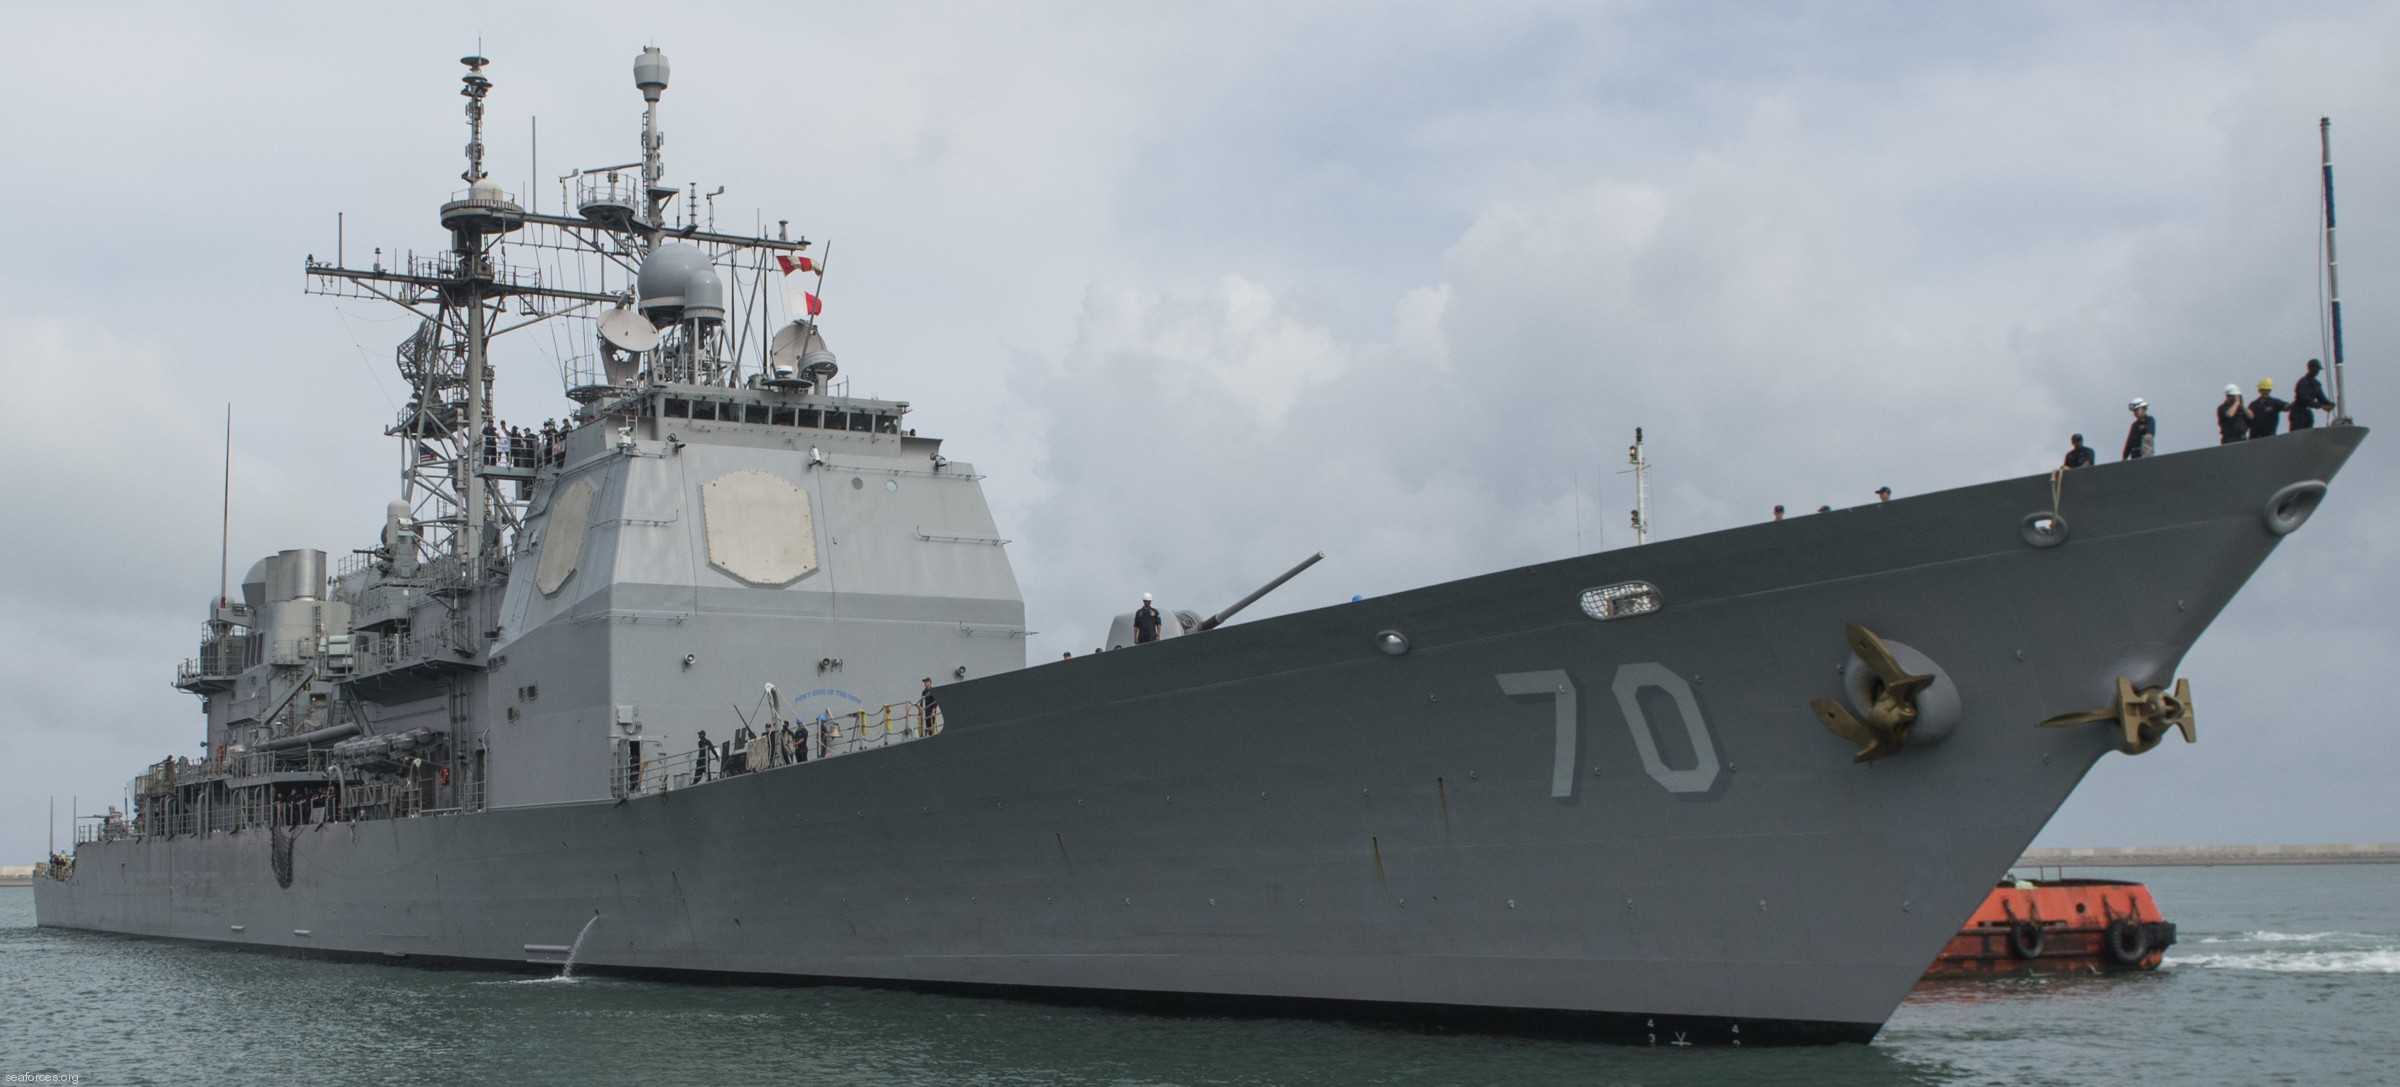 cg-70 uss lake erie ticonderoga class guided missile cruiser navy 98 colombo sri lanka